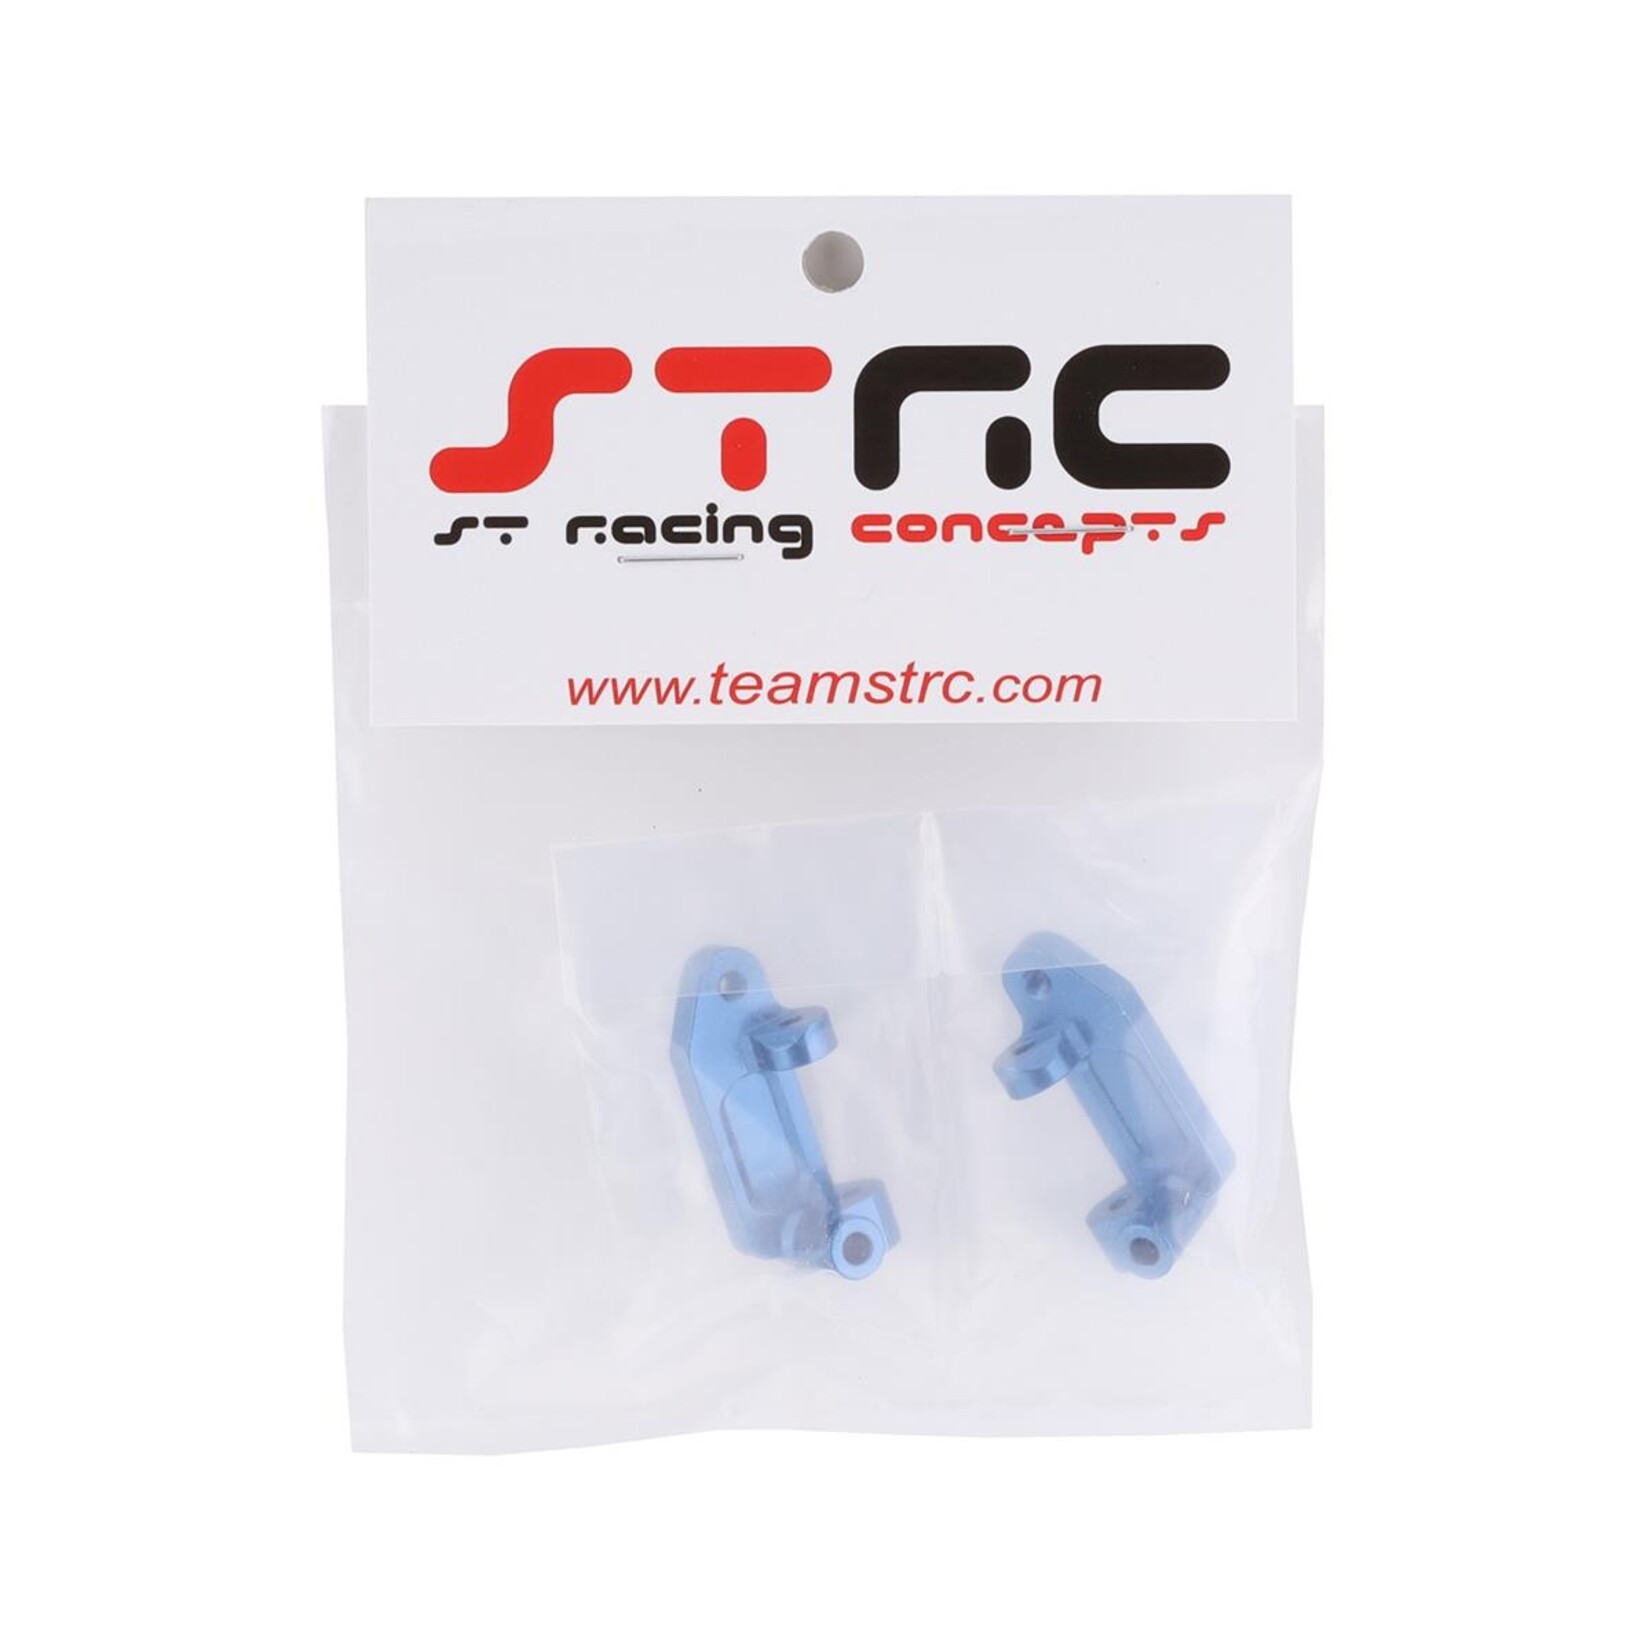 ST Racing Concepts ST Racing Concepts Traxxas Drag Slash Aluminum Caster Blocks (2) (Blue) #ST2432B